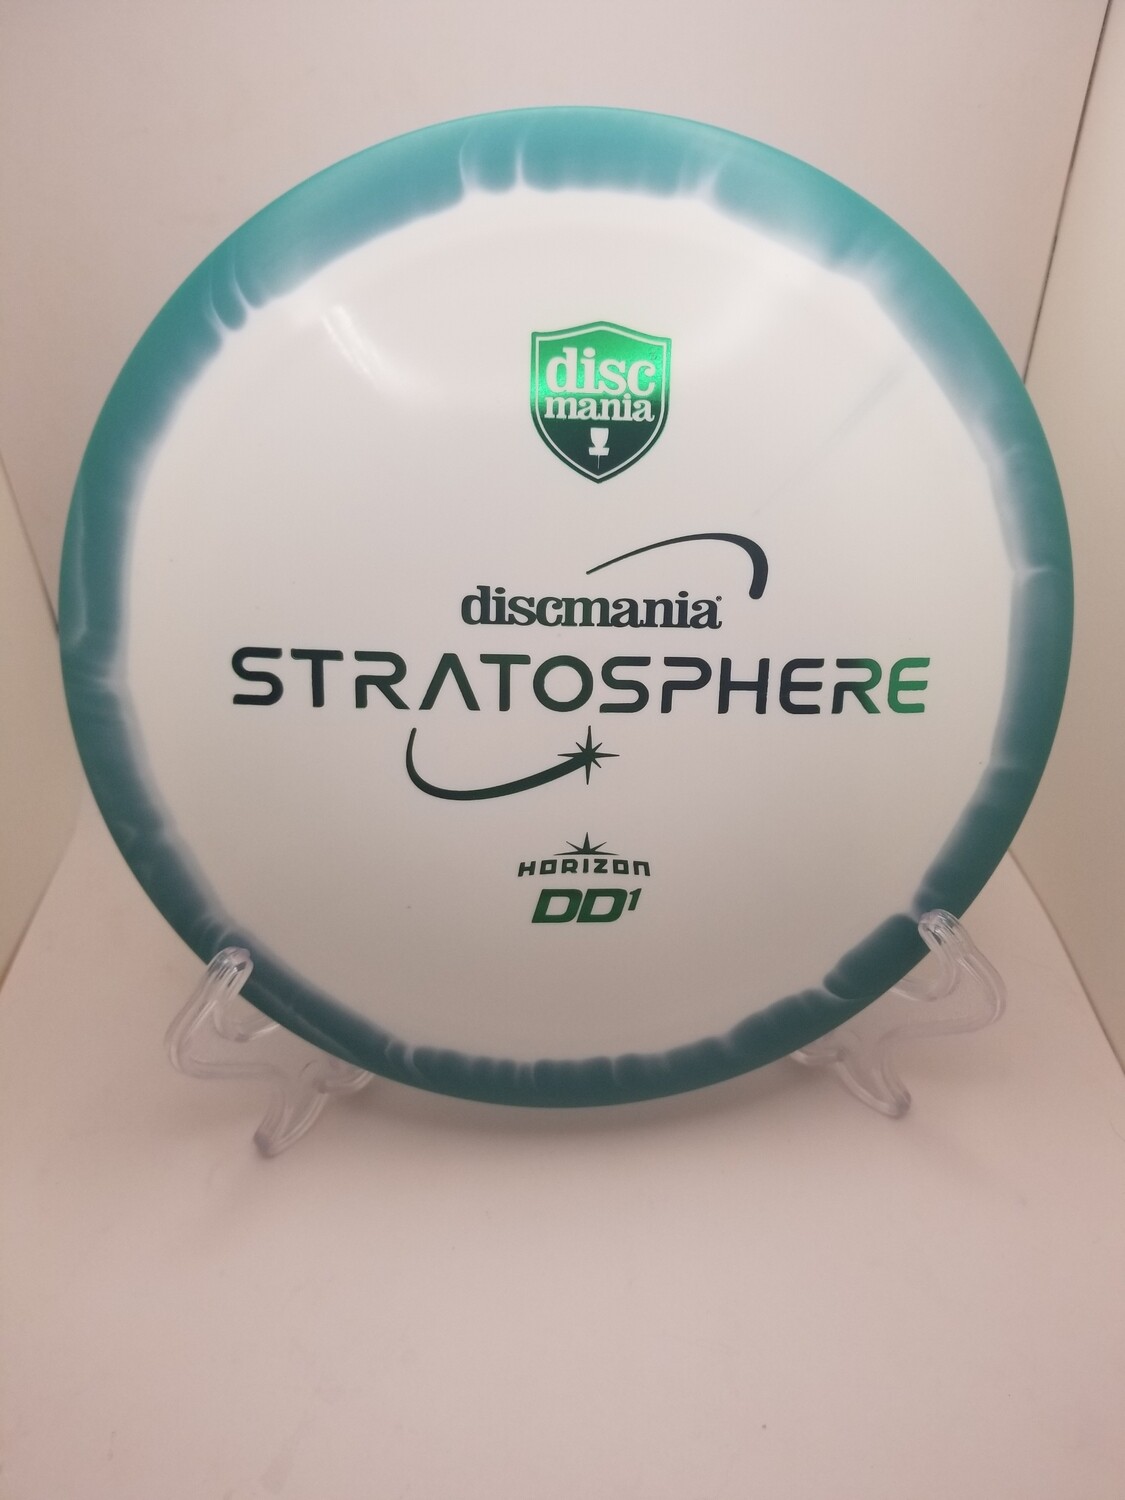 Discmania Discs Horizon DD1 – Stratosphere White Plate with Teal Rim 173-174g